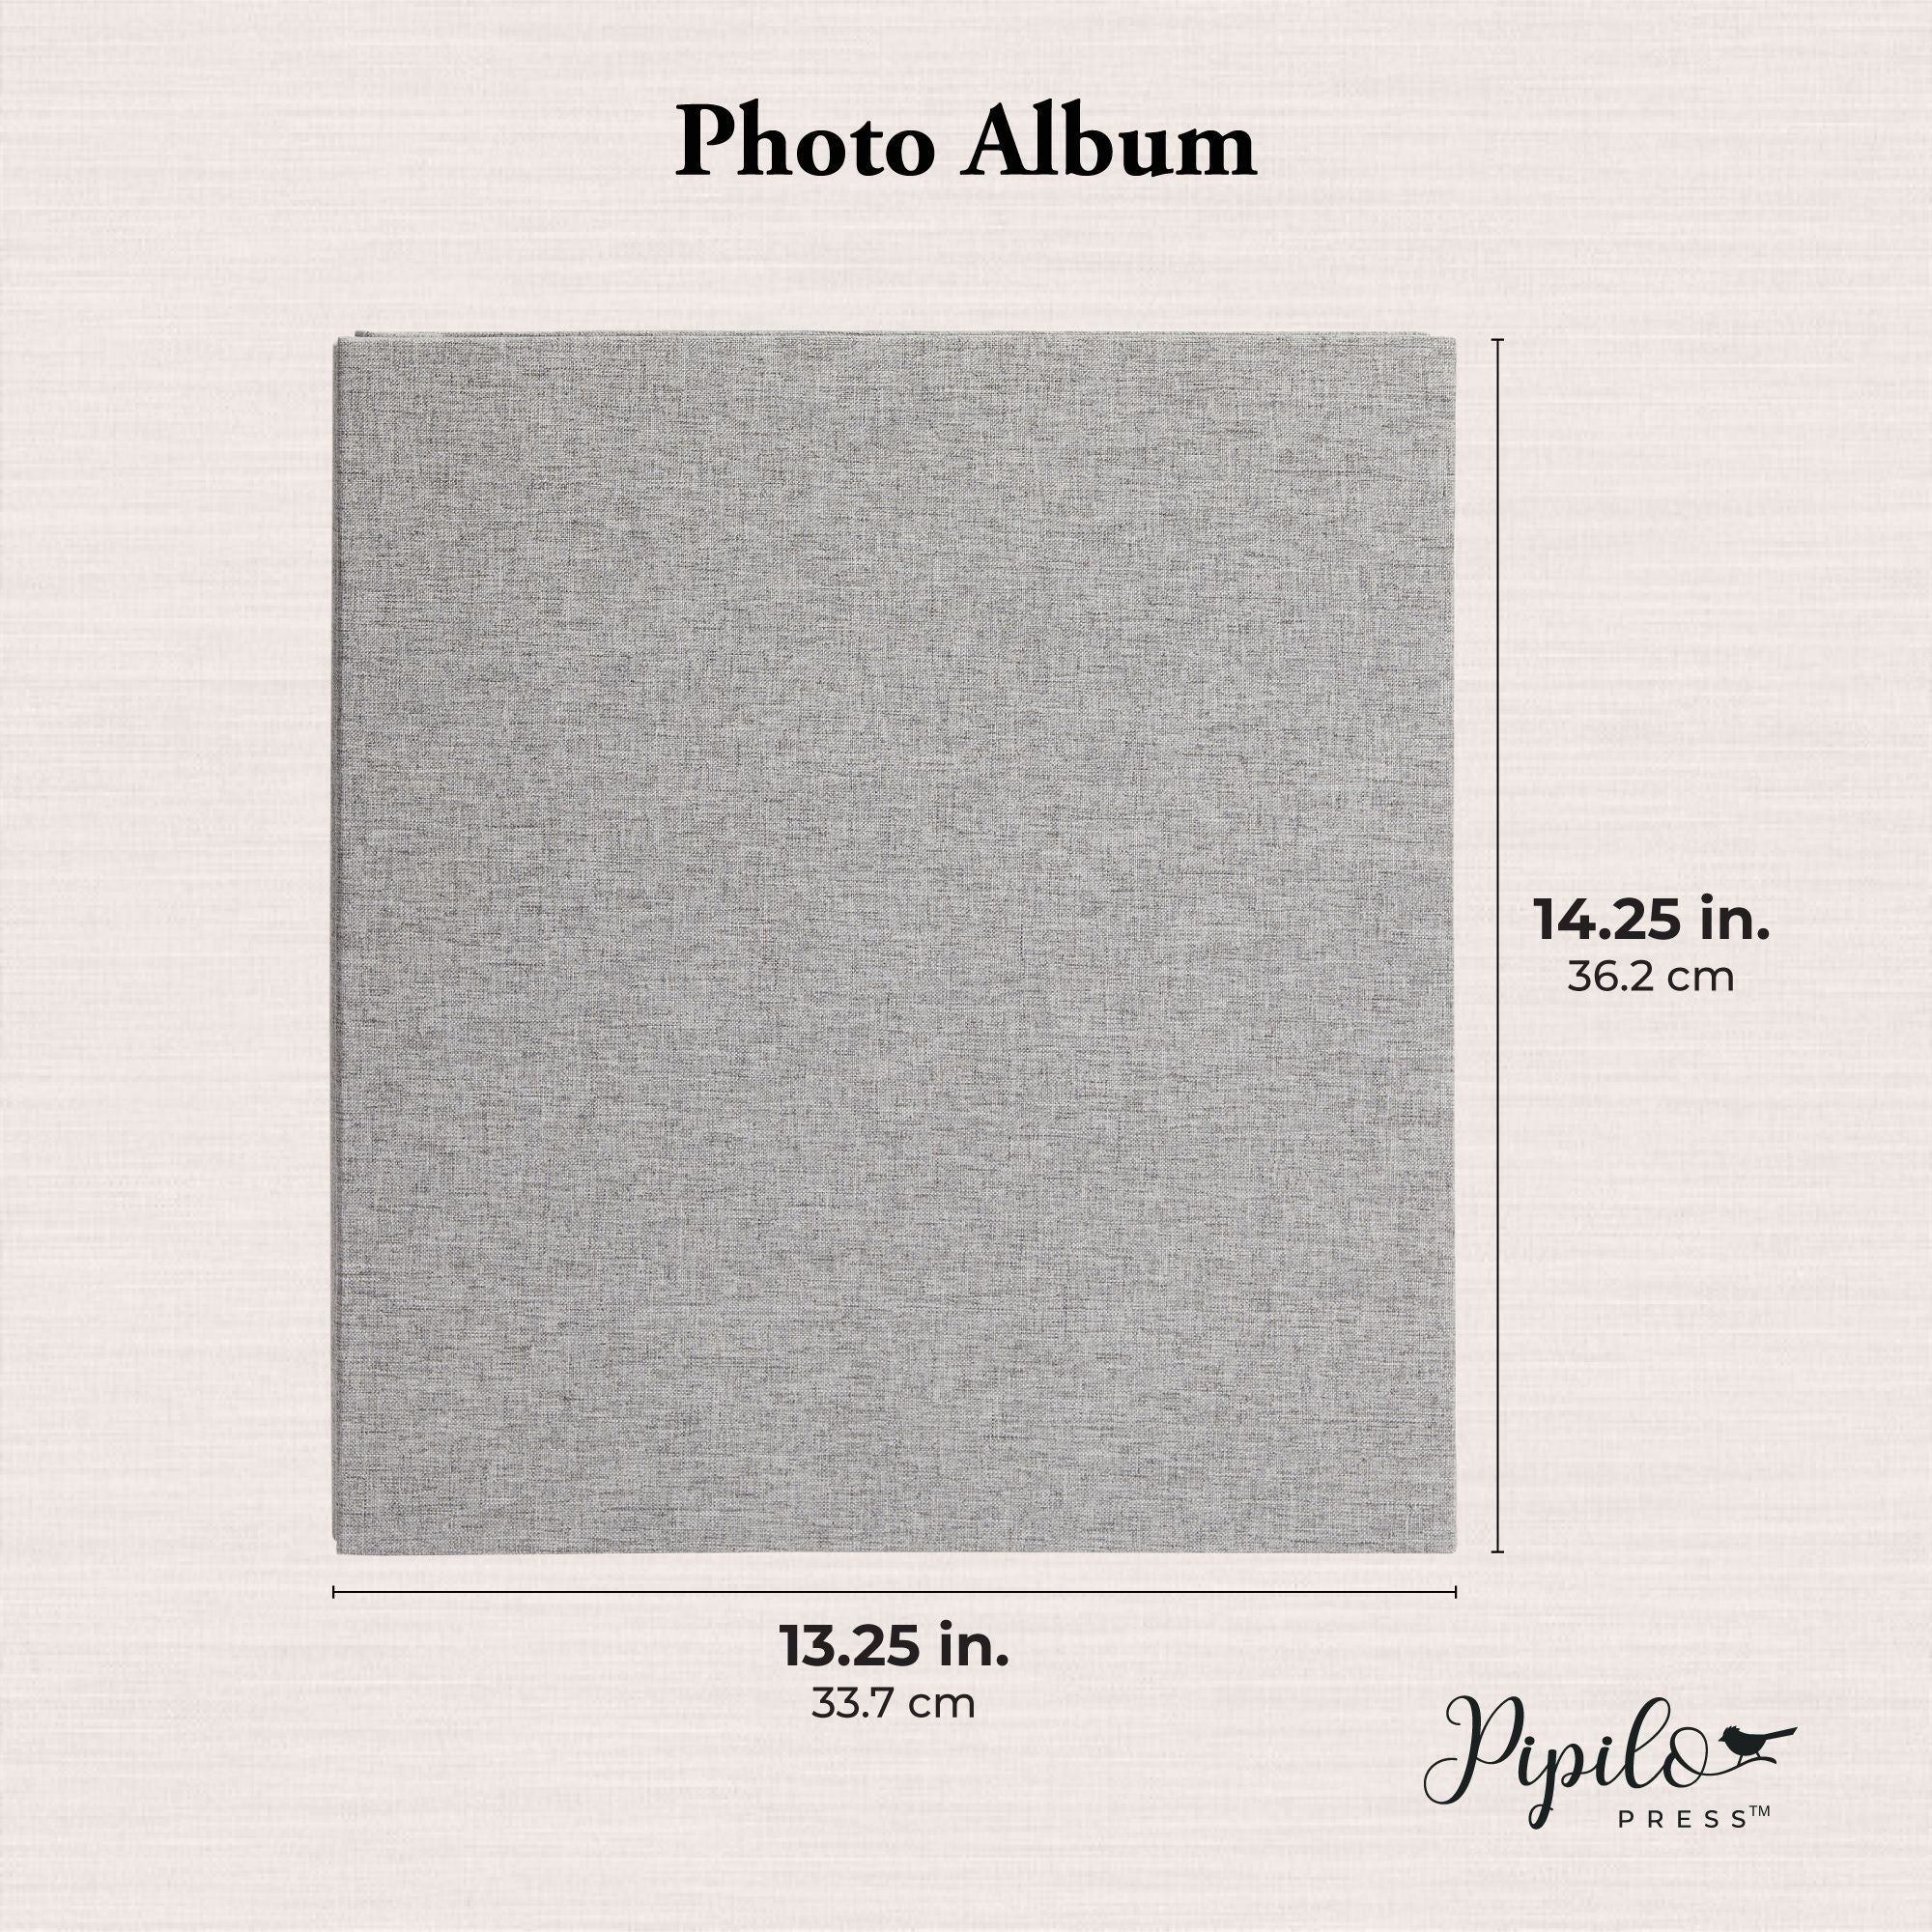 4x6 Photo Album with 1000 Pockets, Extra Large Capacity, Linen